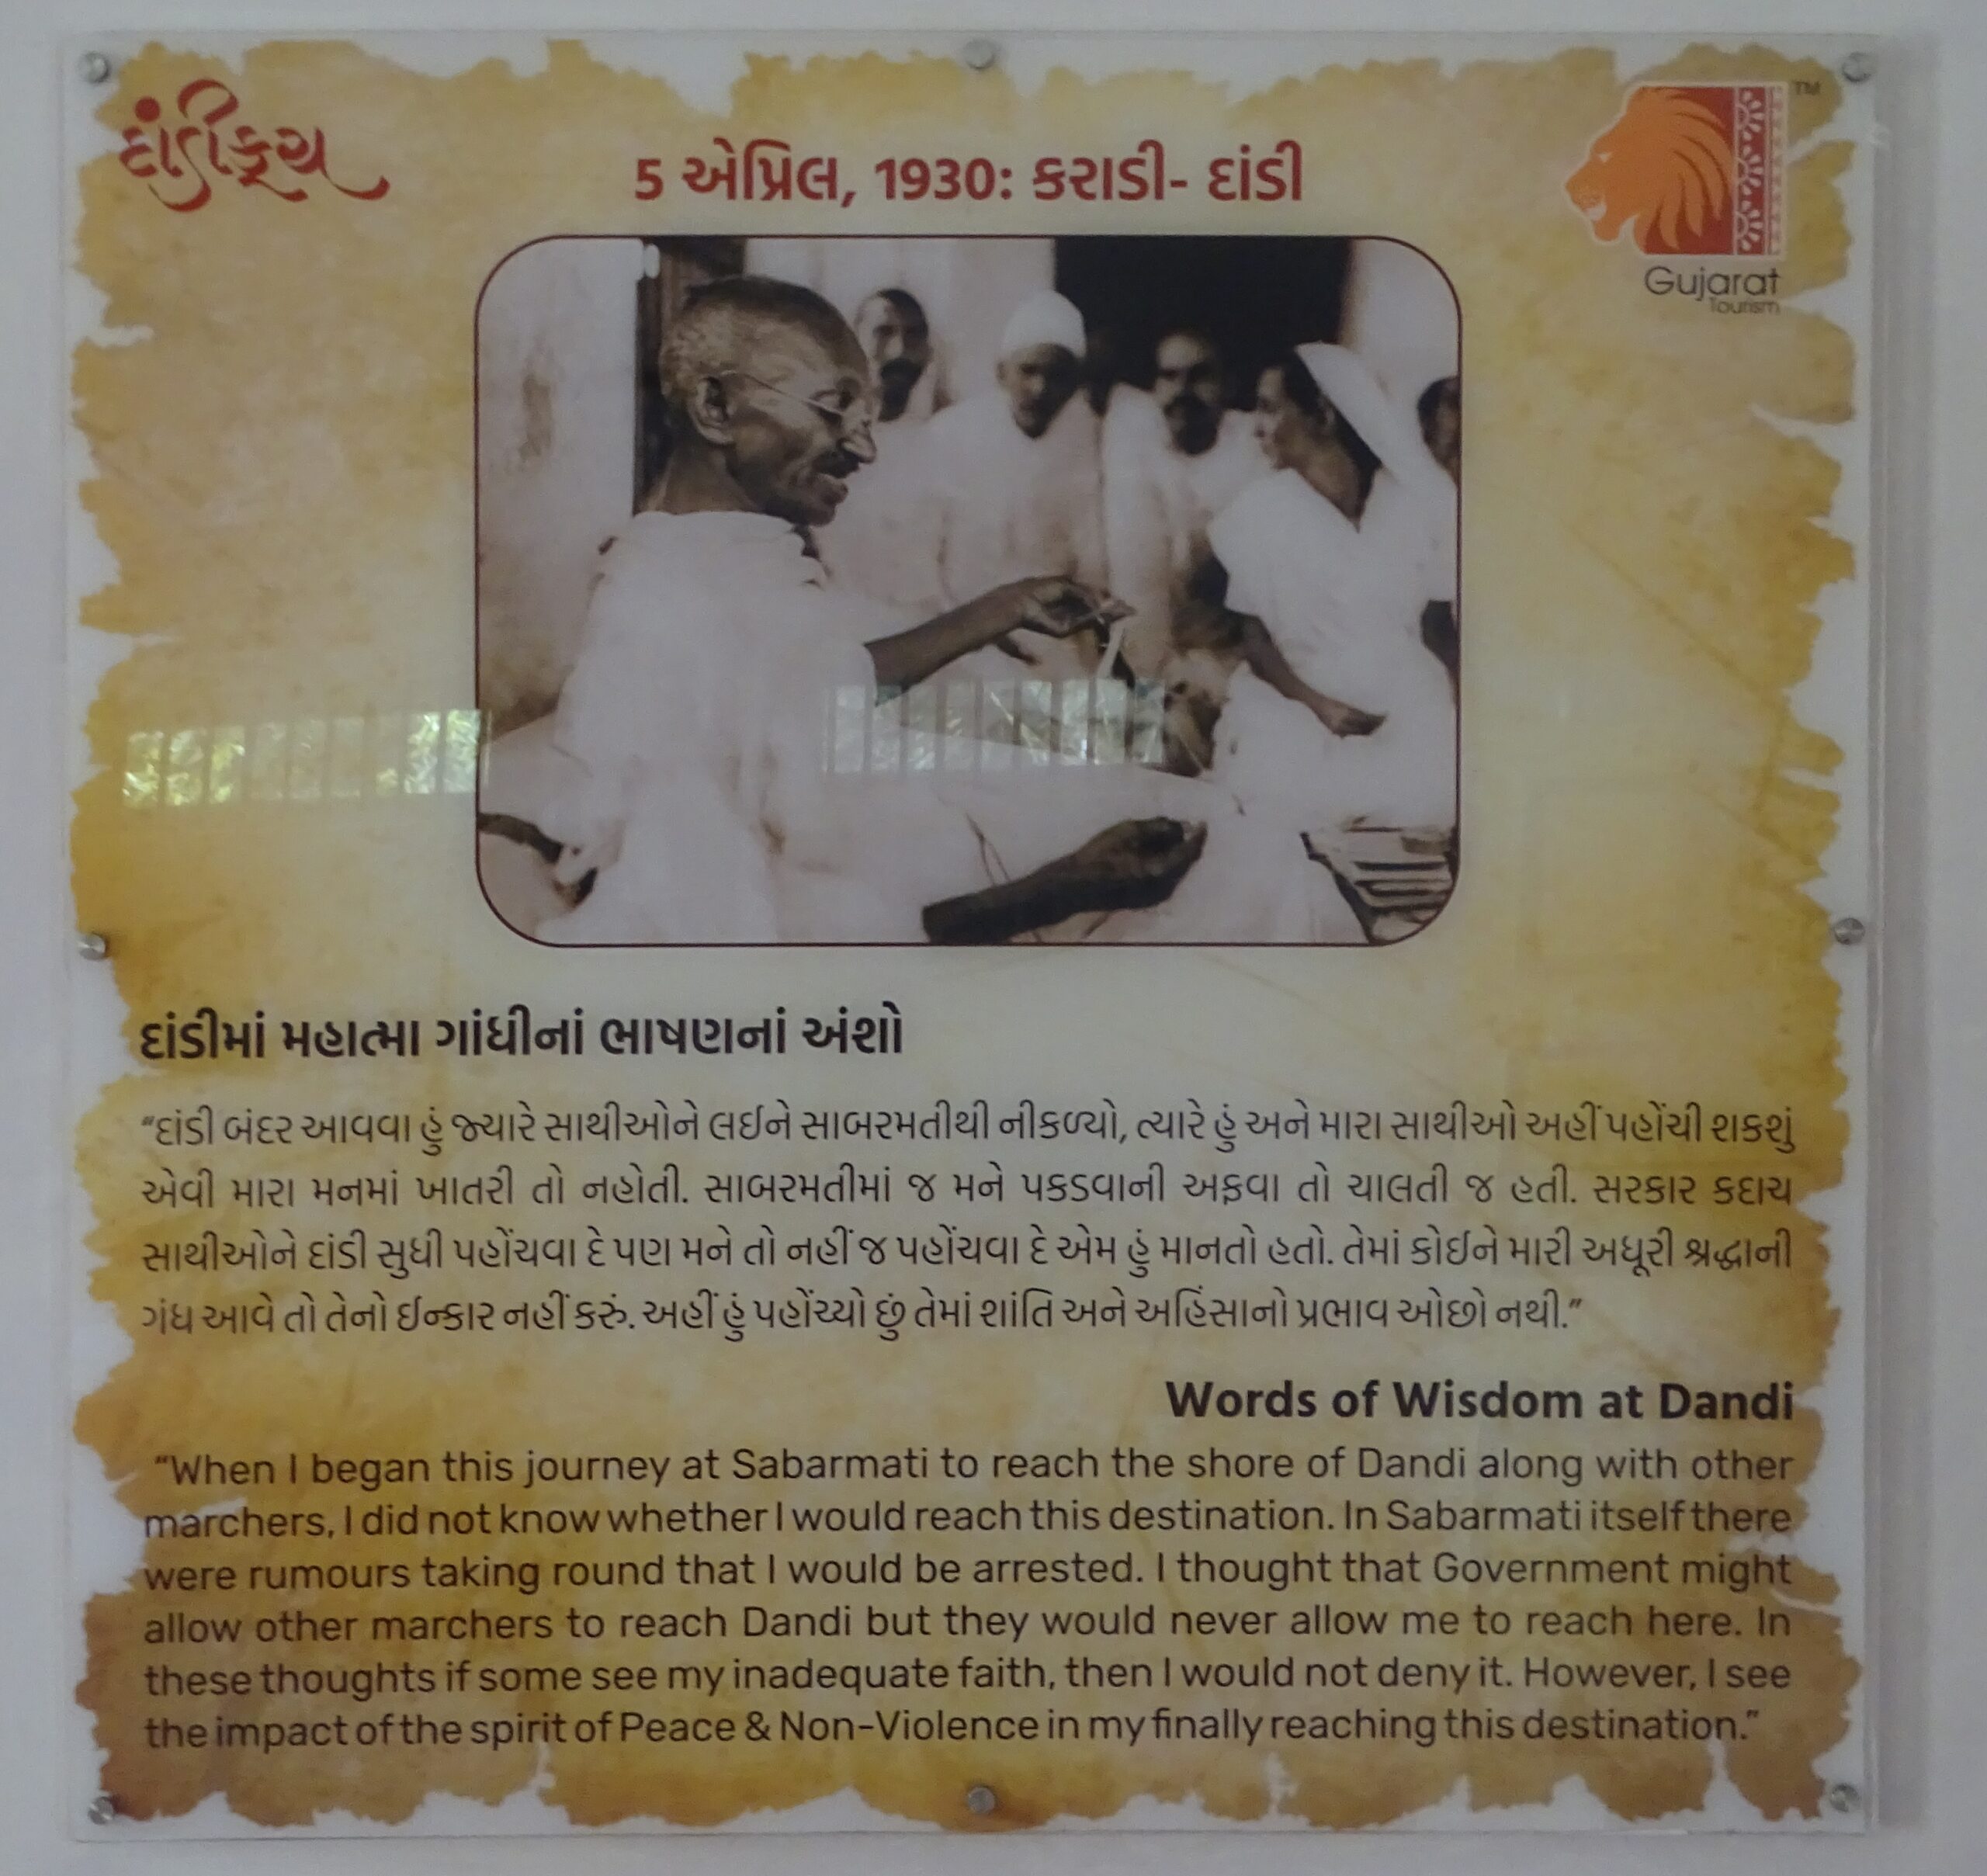 5th April, 1930 - Words of Wisdom by Mahatma Gandhi at Dandi, Gujarat